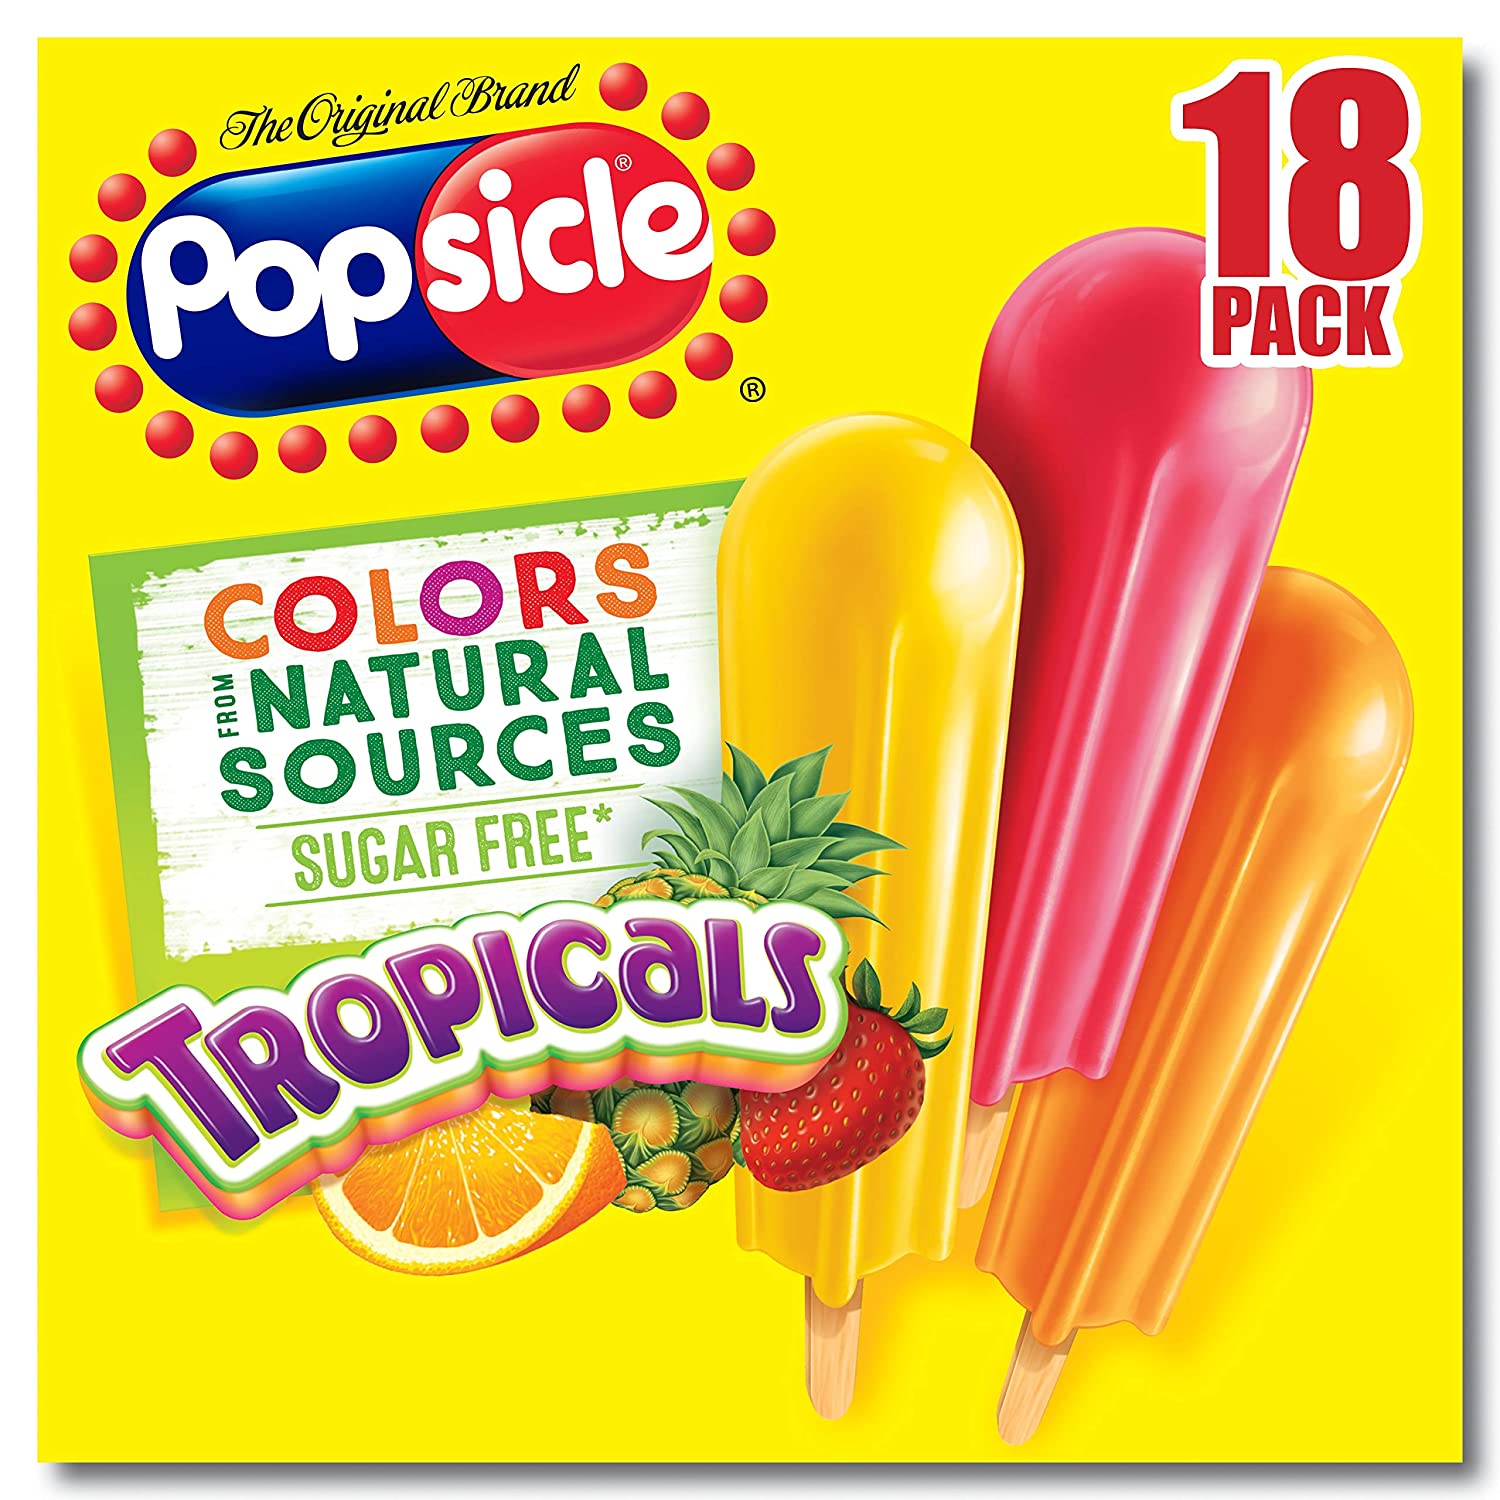 Popsicle, Sugar Free Ice Pops, Tropicals, 20 Count (Frozen): Amazon.com ...